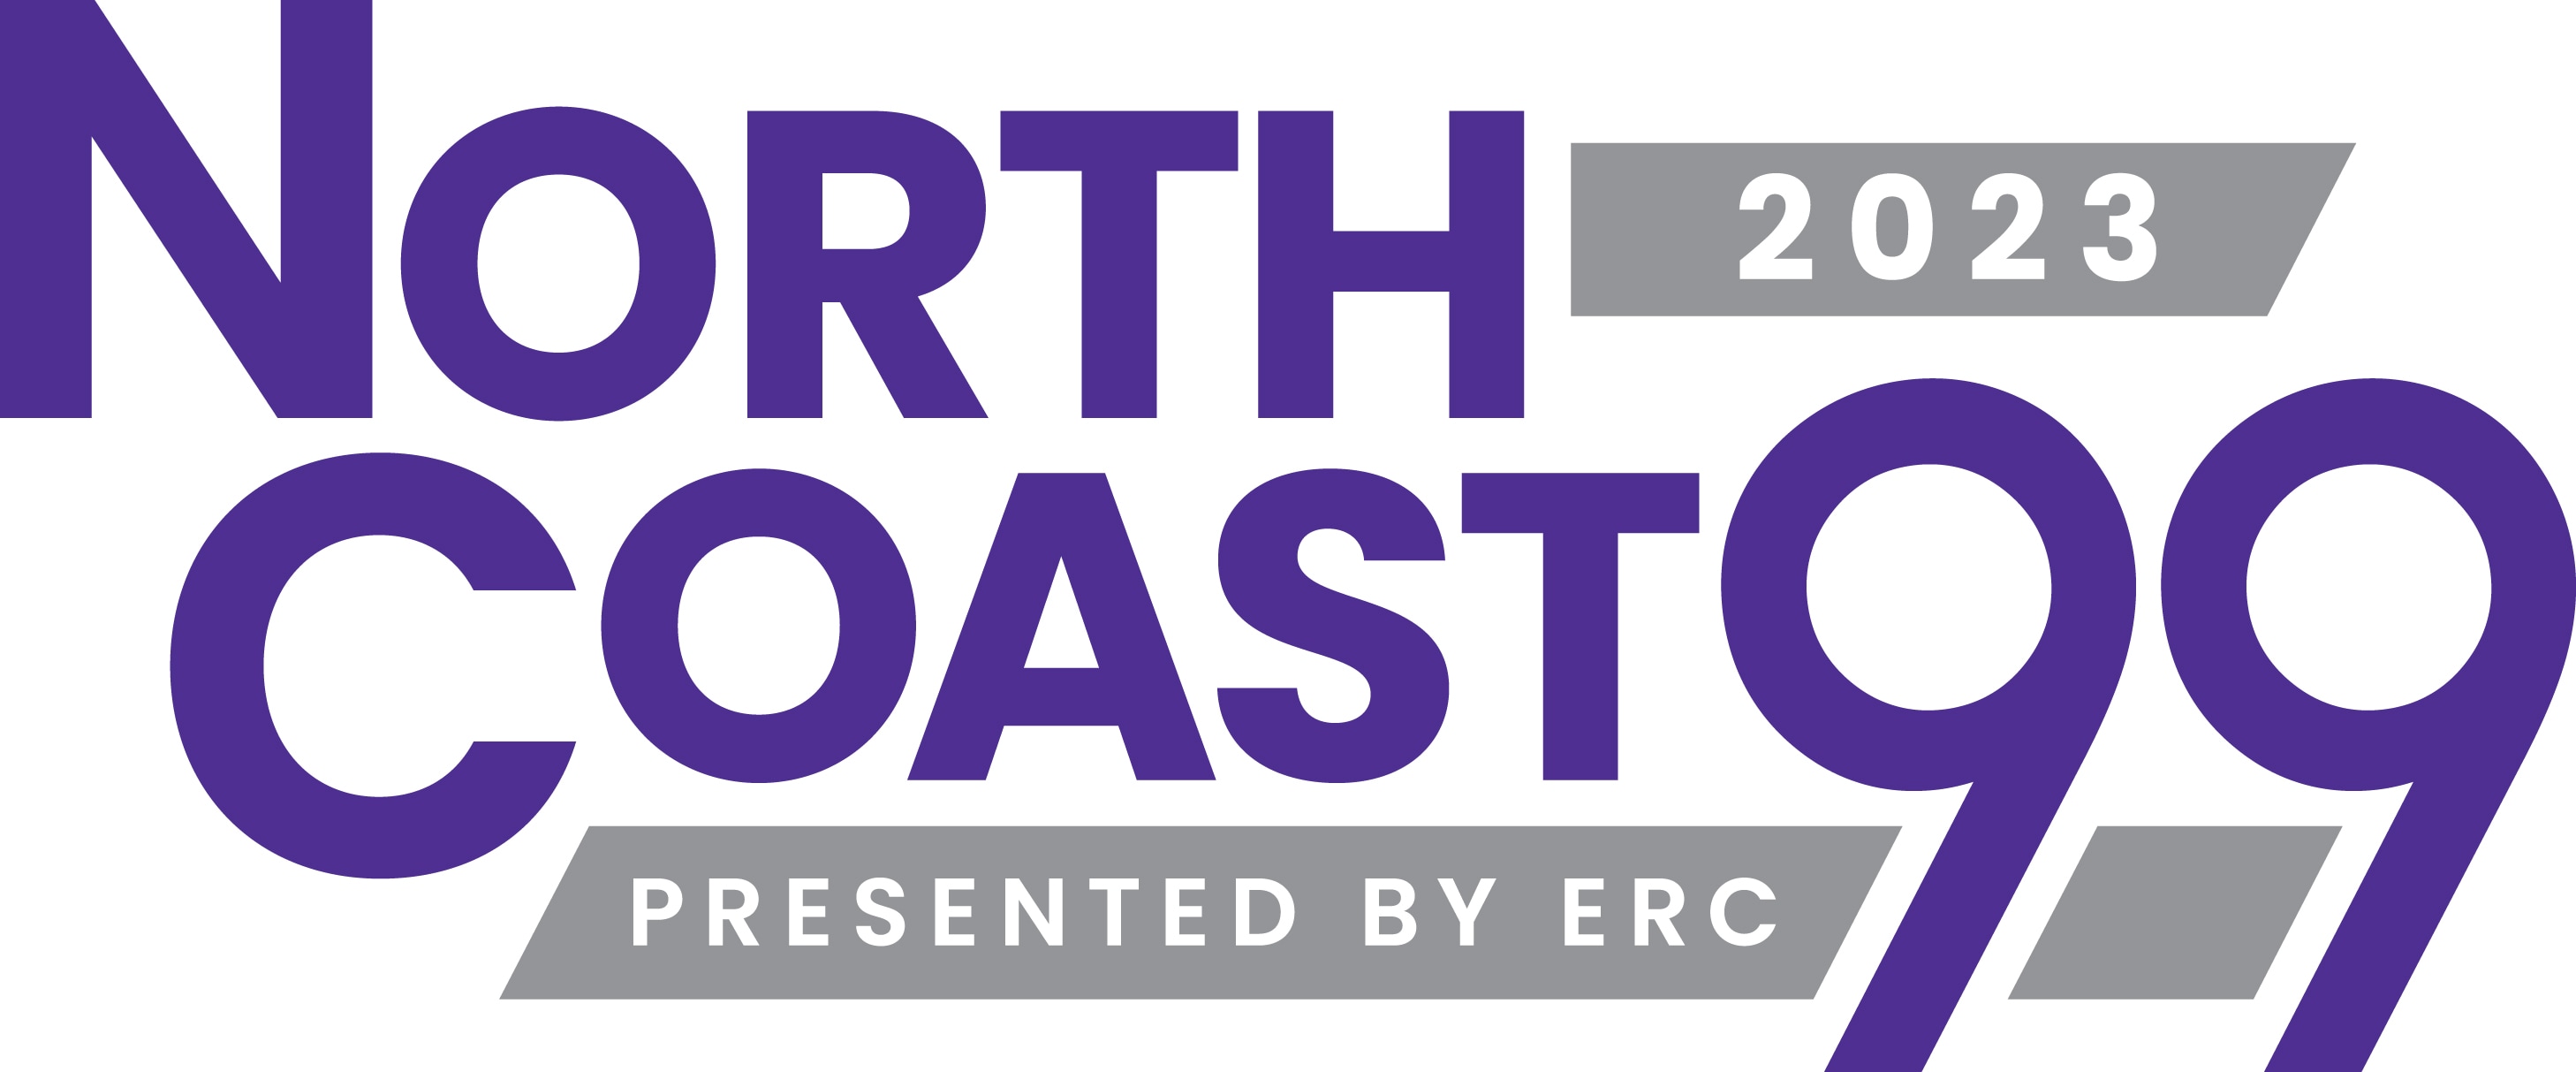 North Coast 99 logo, 2023